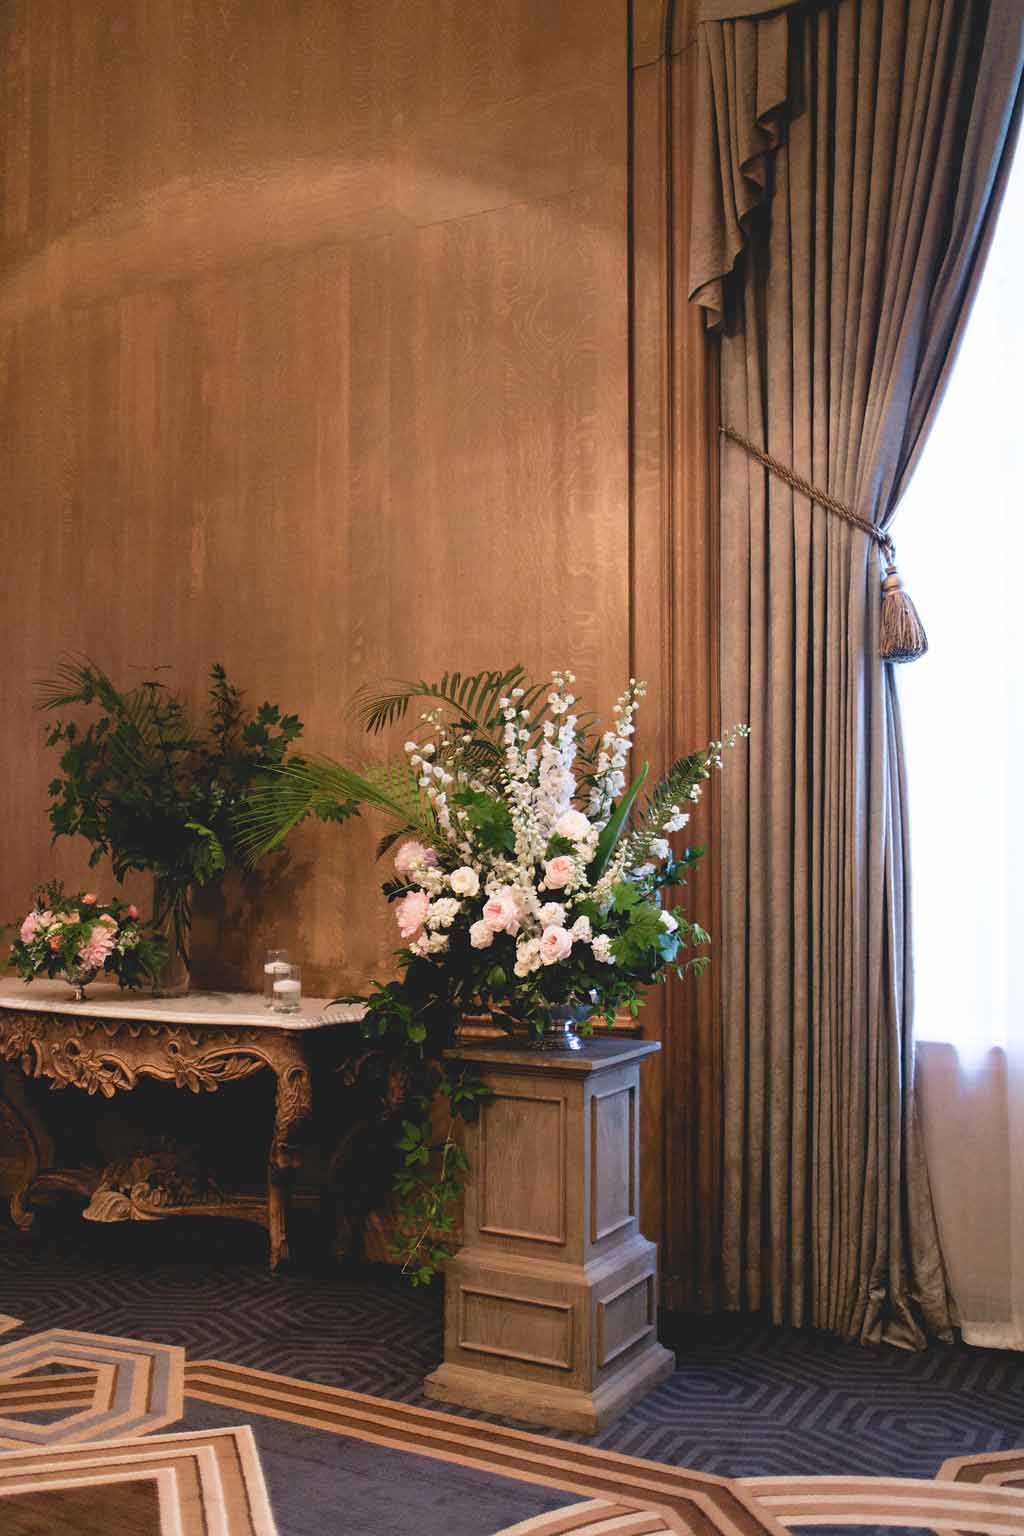 Bella Fiori, Seattle Wedding Florist, Fairmont Olympic Hotel - Garden Styled Ceremony Altar Floral Arrangments